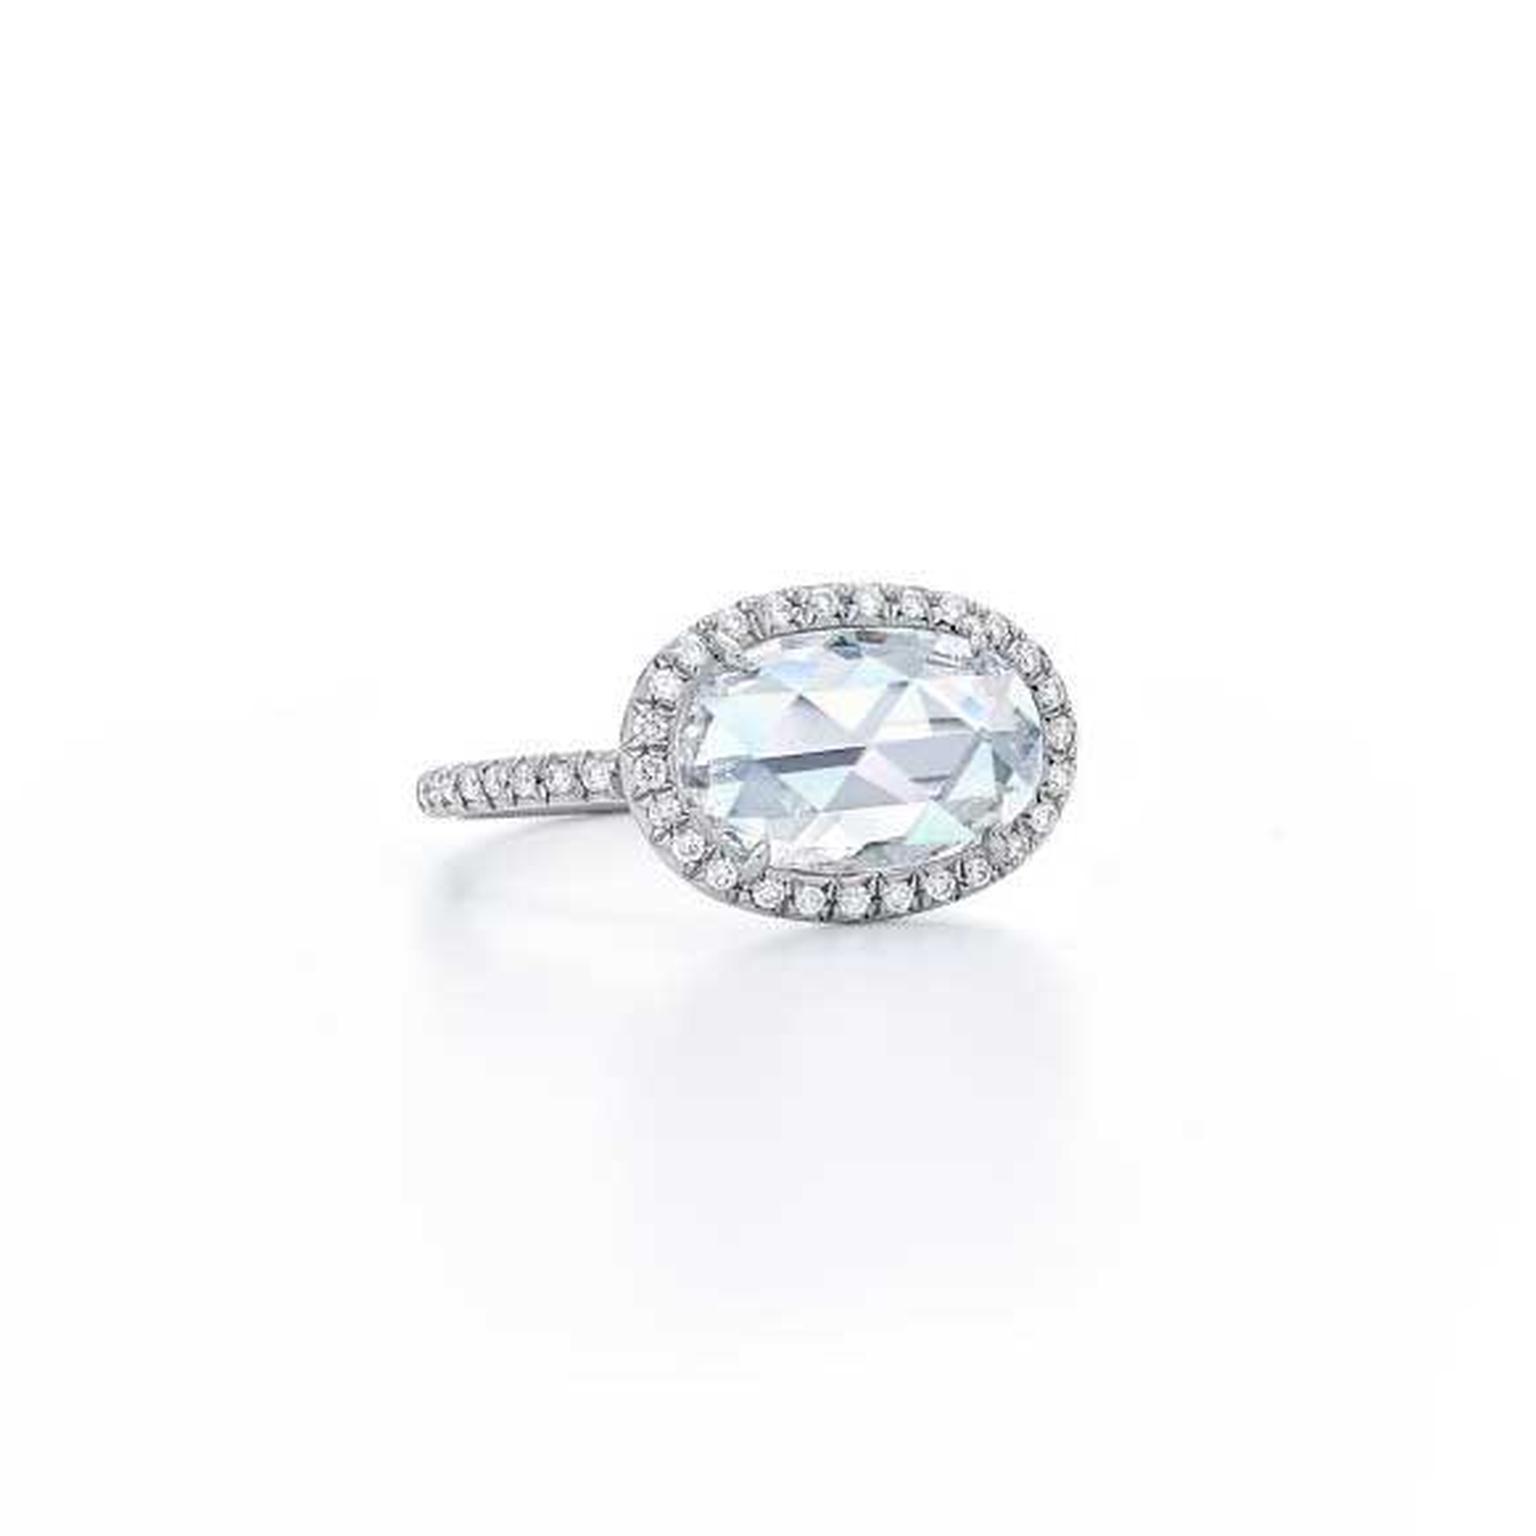 Fred Leighton oval rose-cut diamond sideset ring